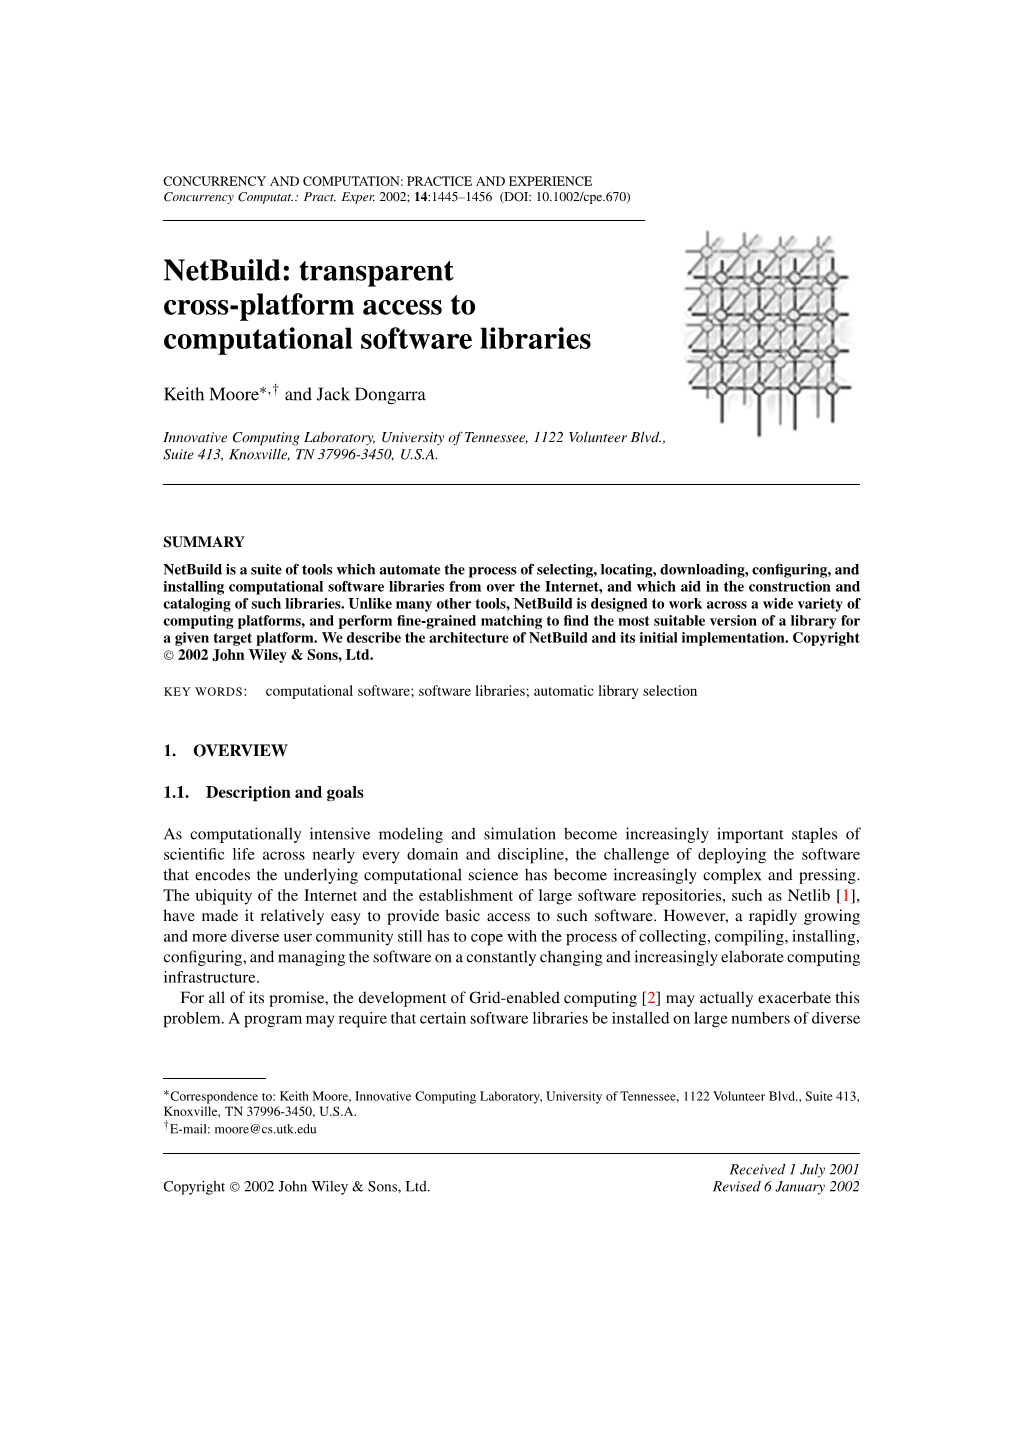 Netbuild: Transparent Cross-Platform Access to Computational Software Libraries